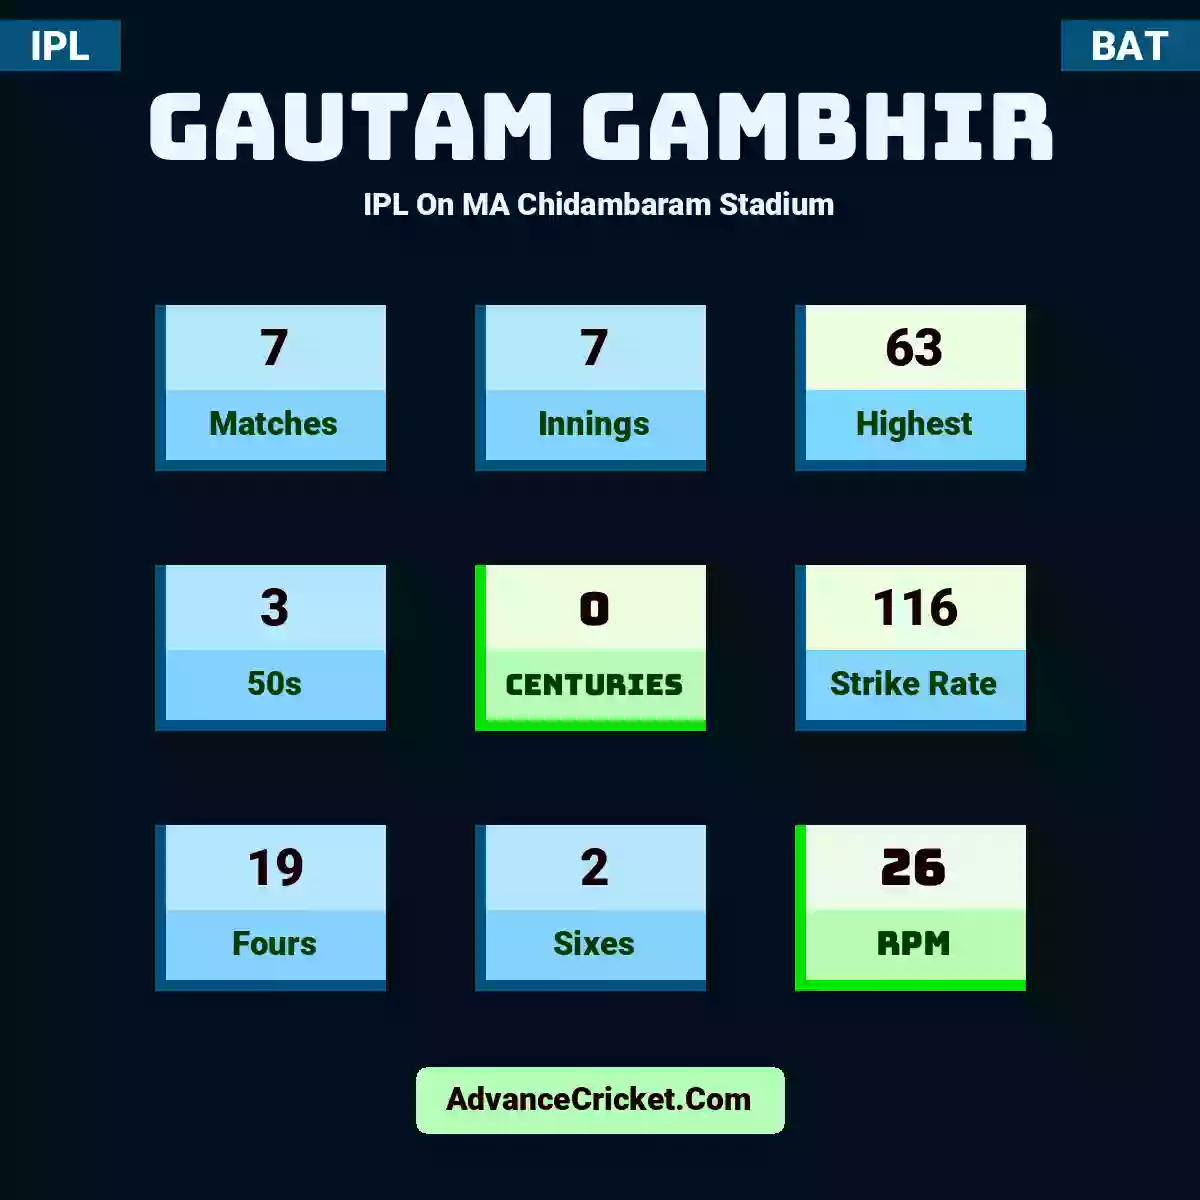 Gautam Gambhir IPL  On MA Chidambaram Stadium, Gautam Gambhir played 7 matches, scored 63 runs as highest, 3 half-centuries, and 0 centuries, with a strike rate of 116. G.Gambhir hit 19 fours and 2 sixes, with an RPM of 26.